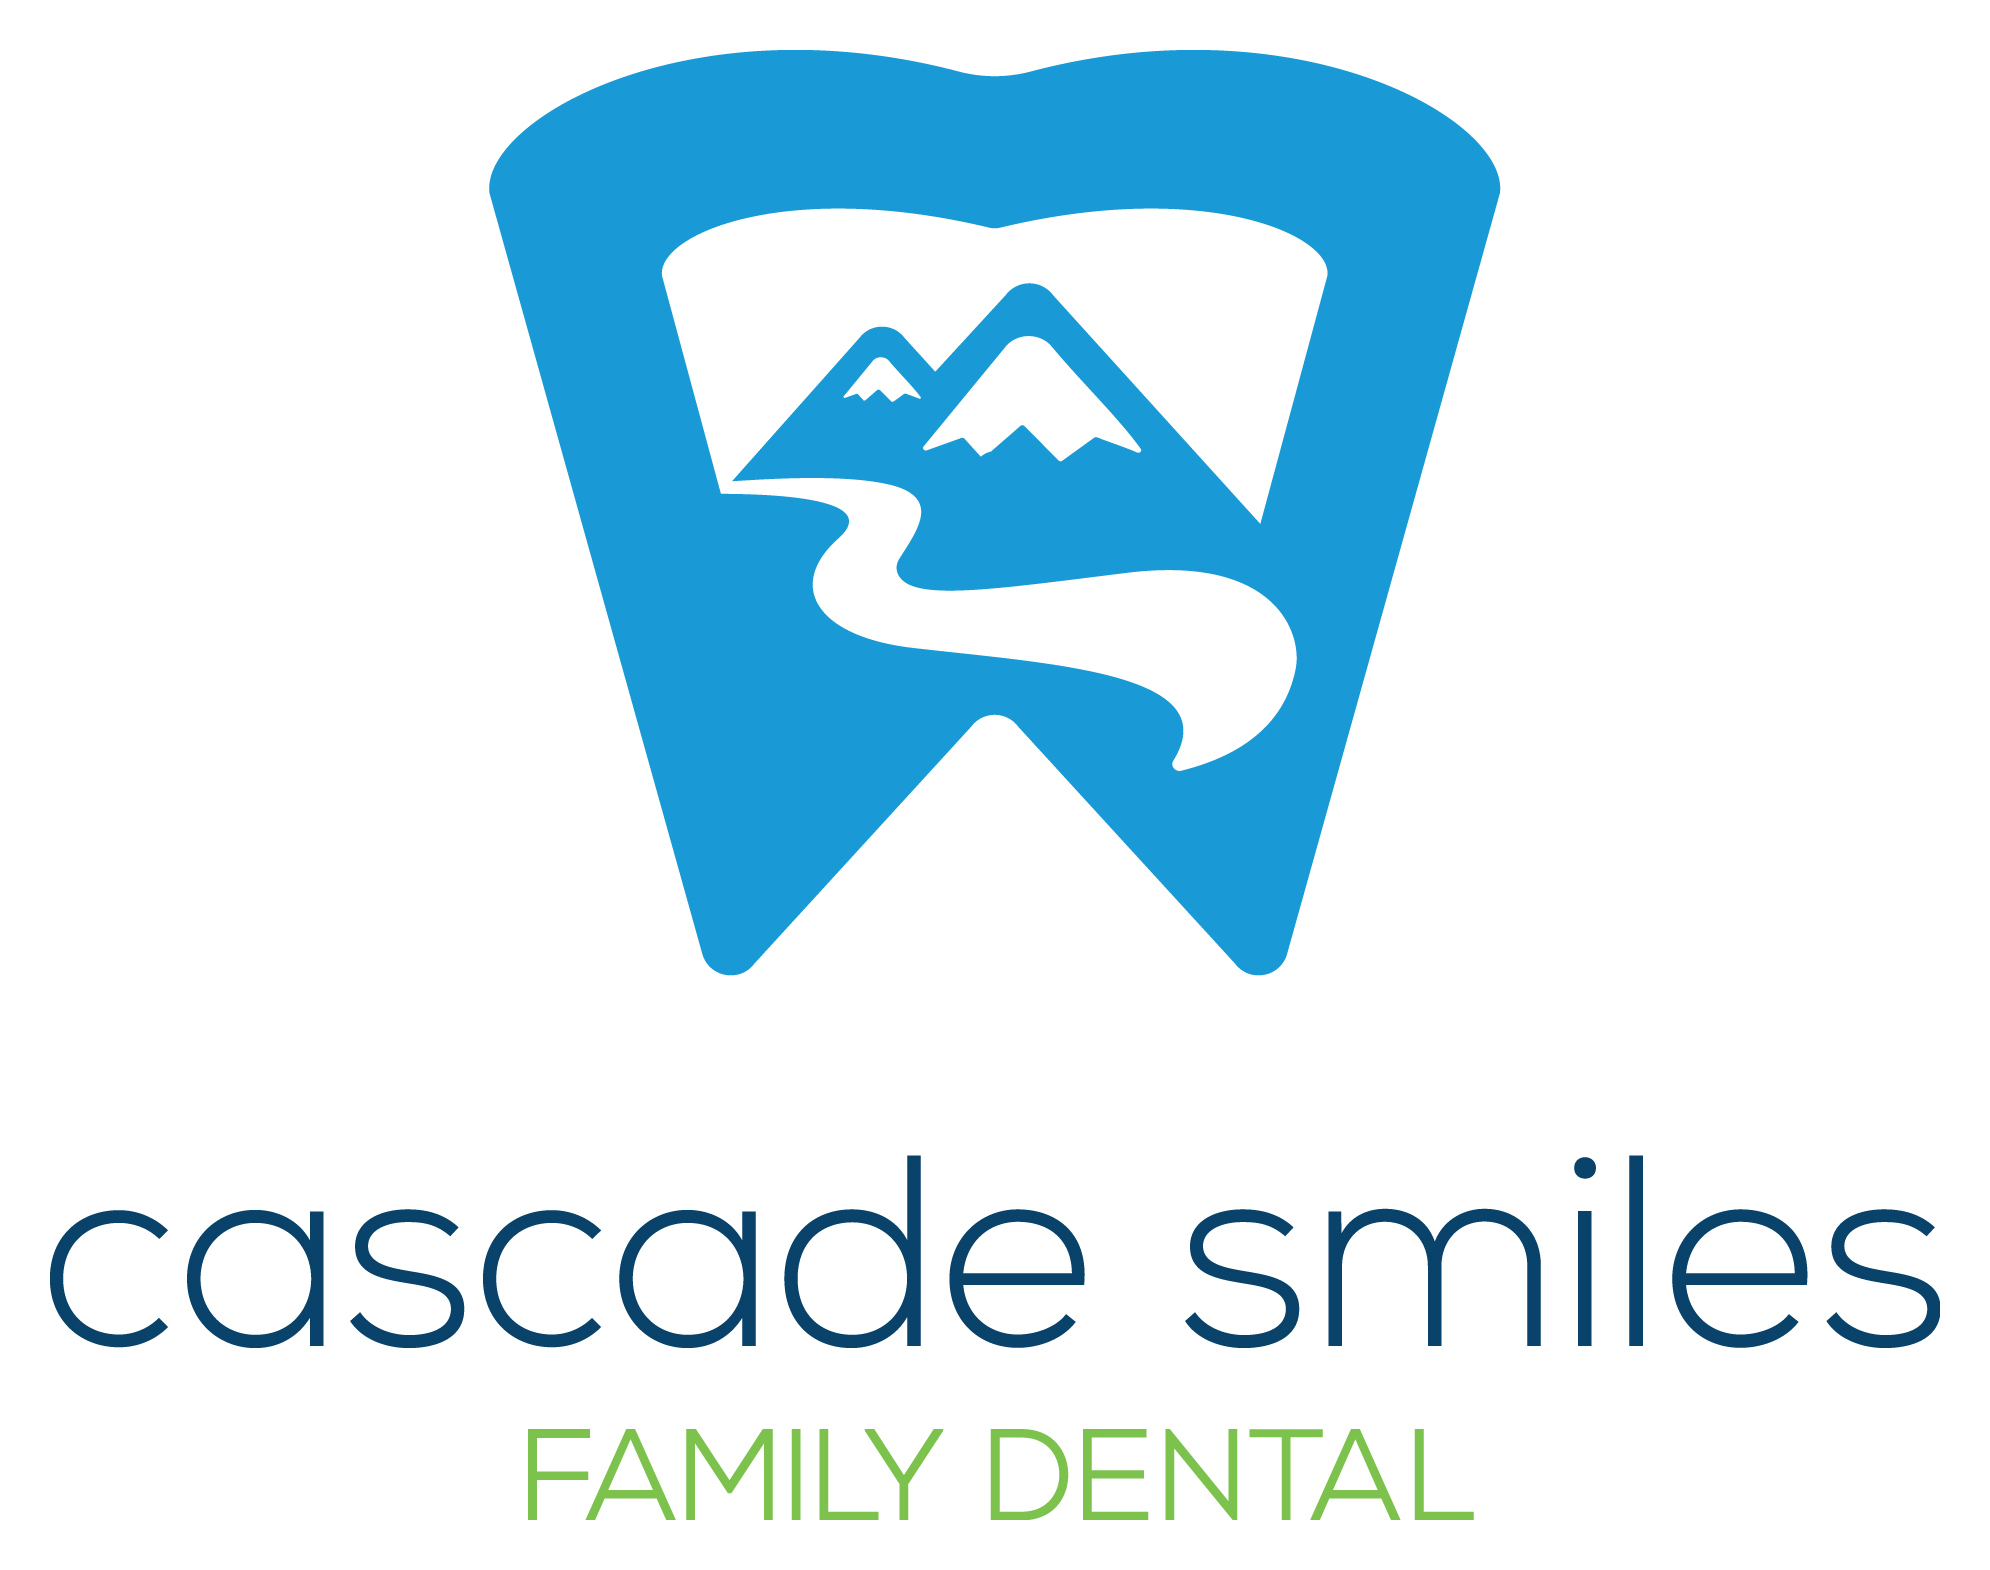 Cascade Smiles Family Dental | John Gallucci DMD, FAGD | Michelle Bloemers DMD